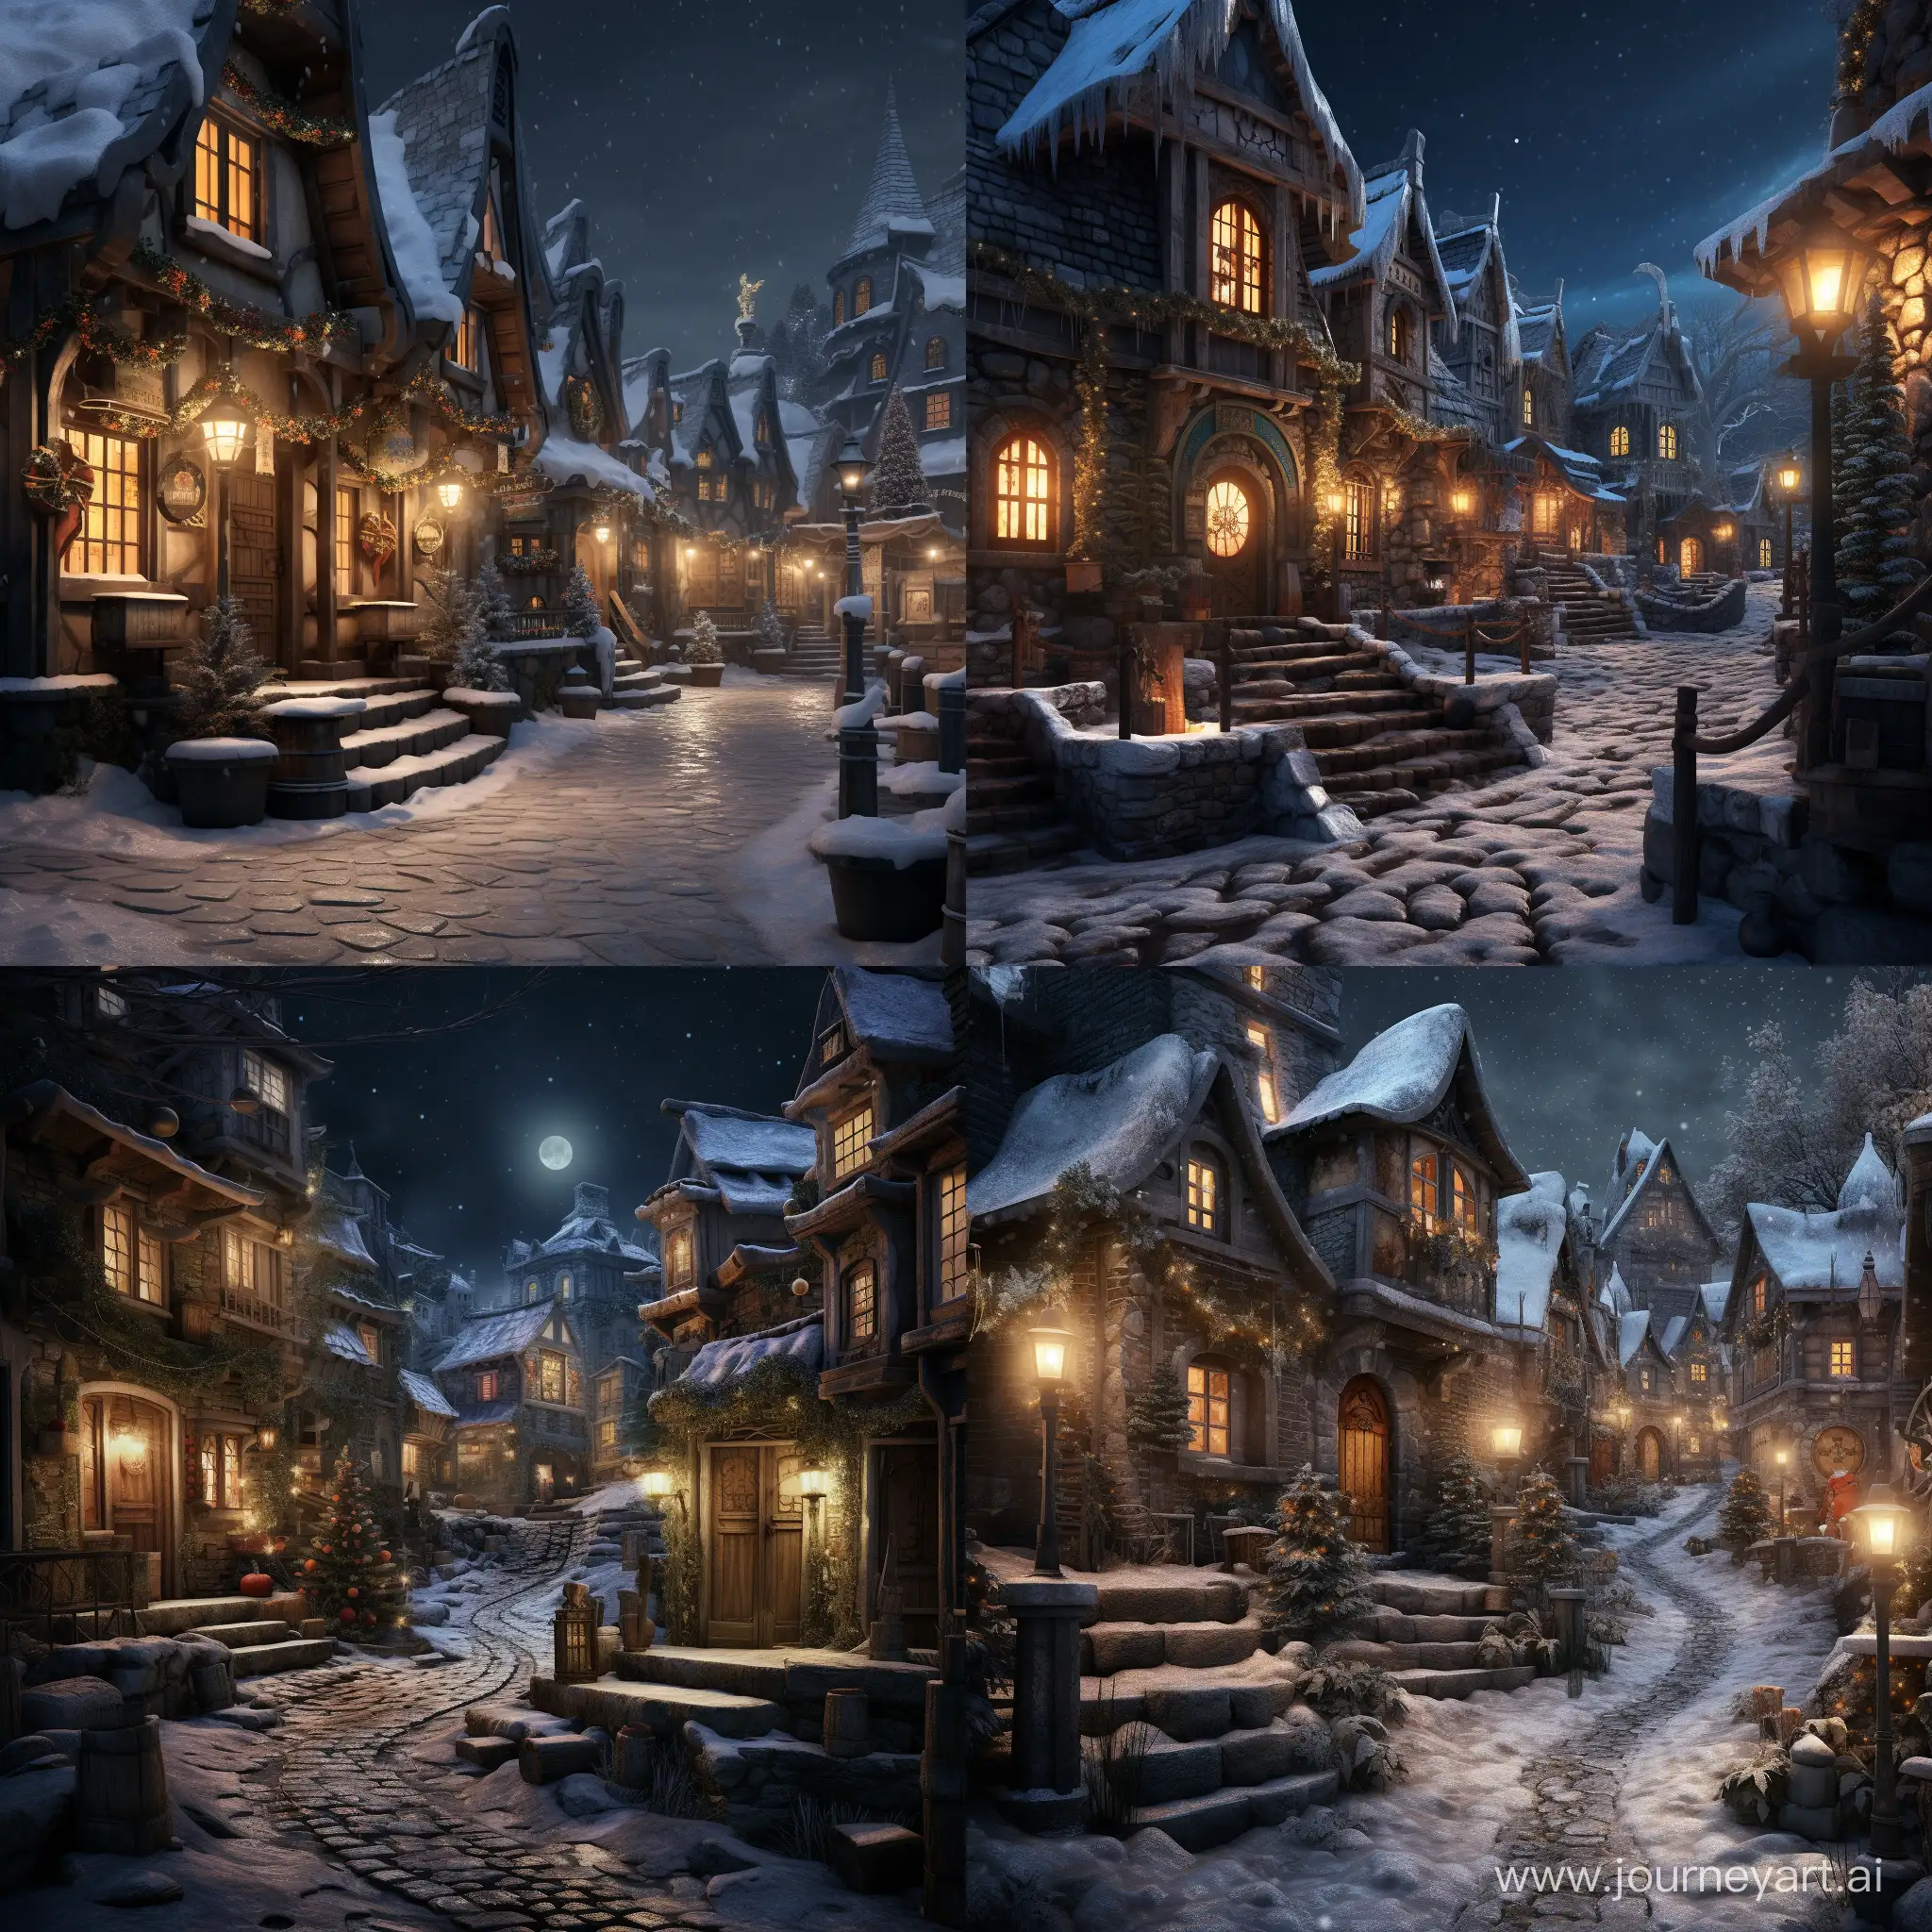 Enchanting-Night-in-Harry-PotterInspired-Christmas-Fantasy-City